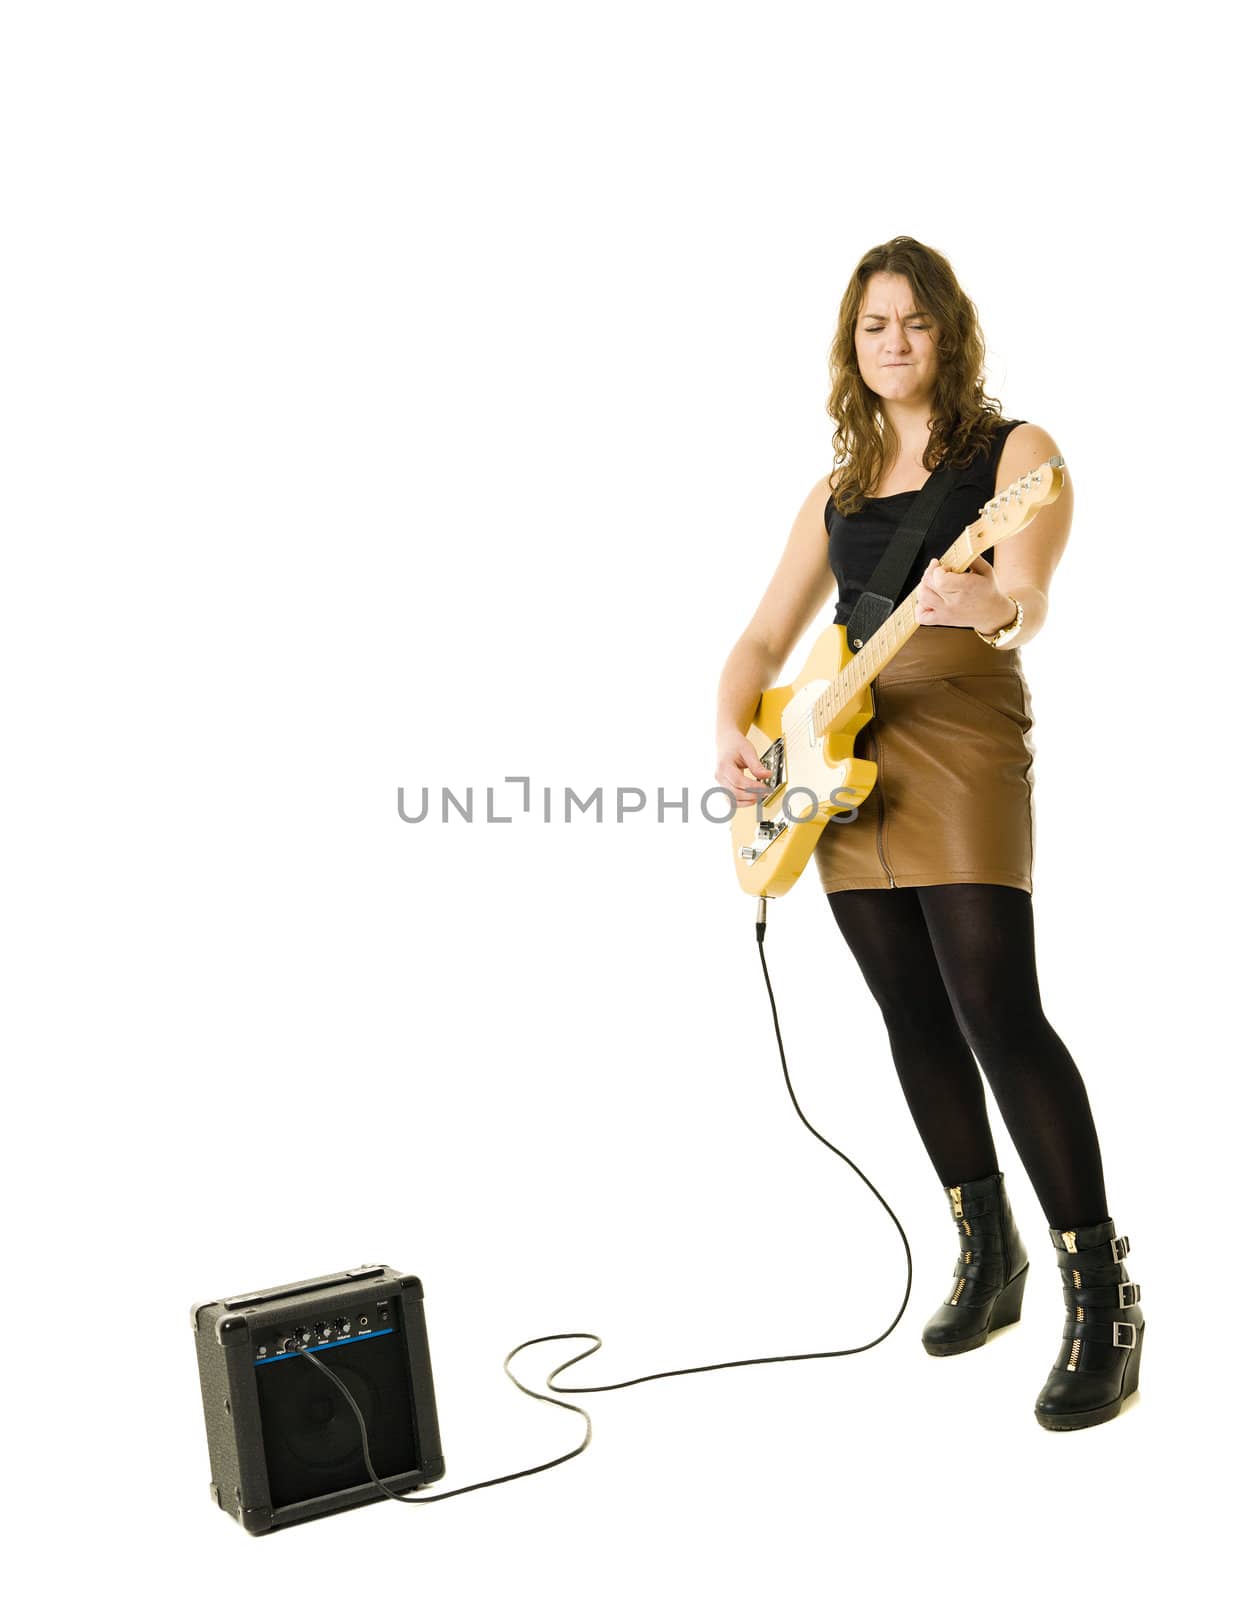 Woman playing guitar by gemenacom